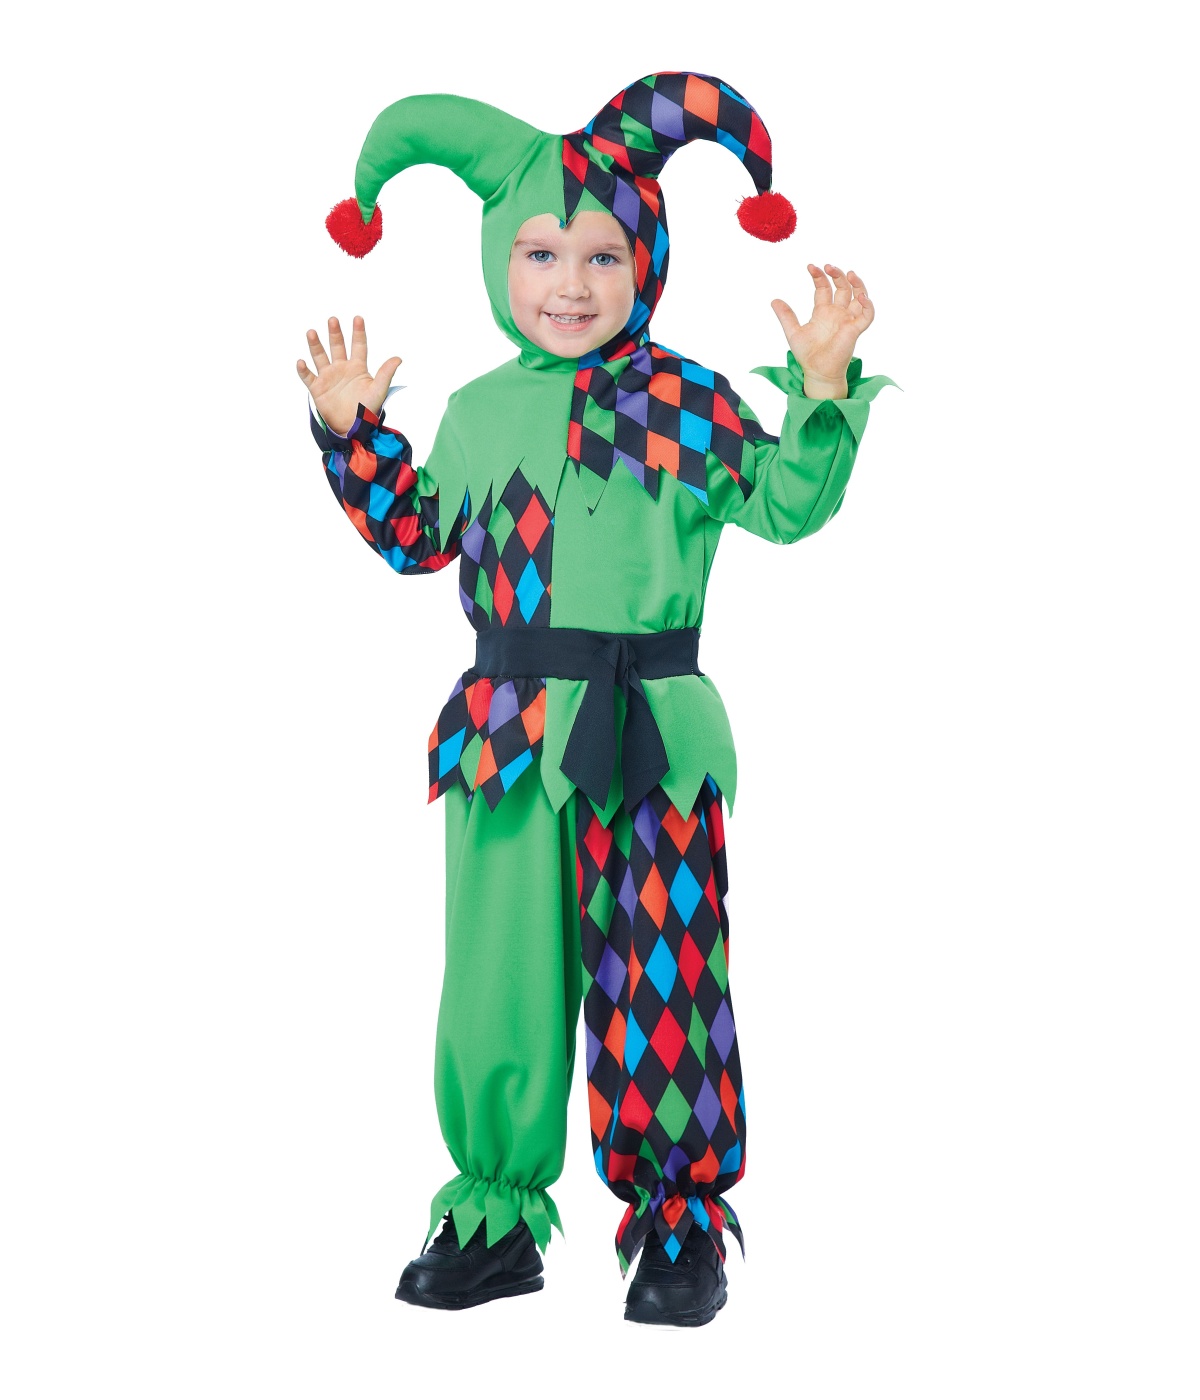  Boys Junior Jester Magical Costume